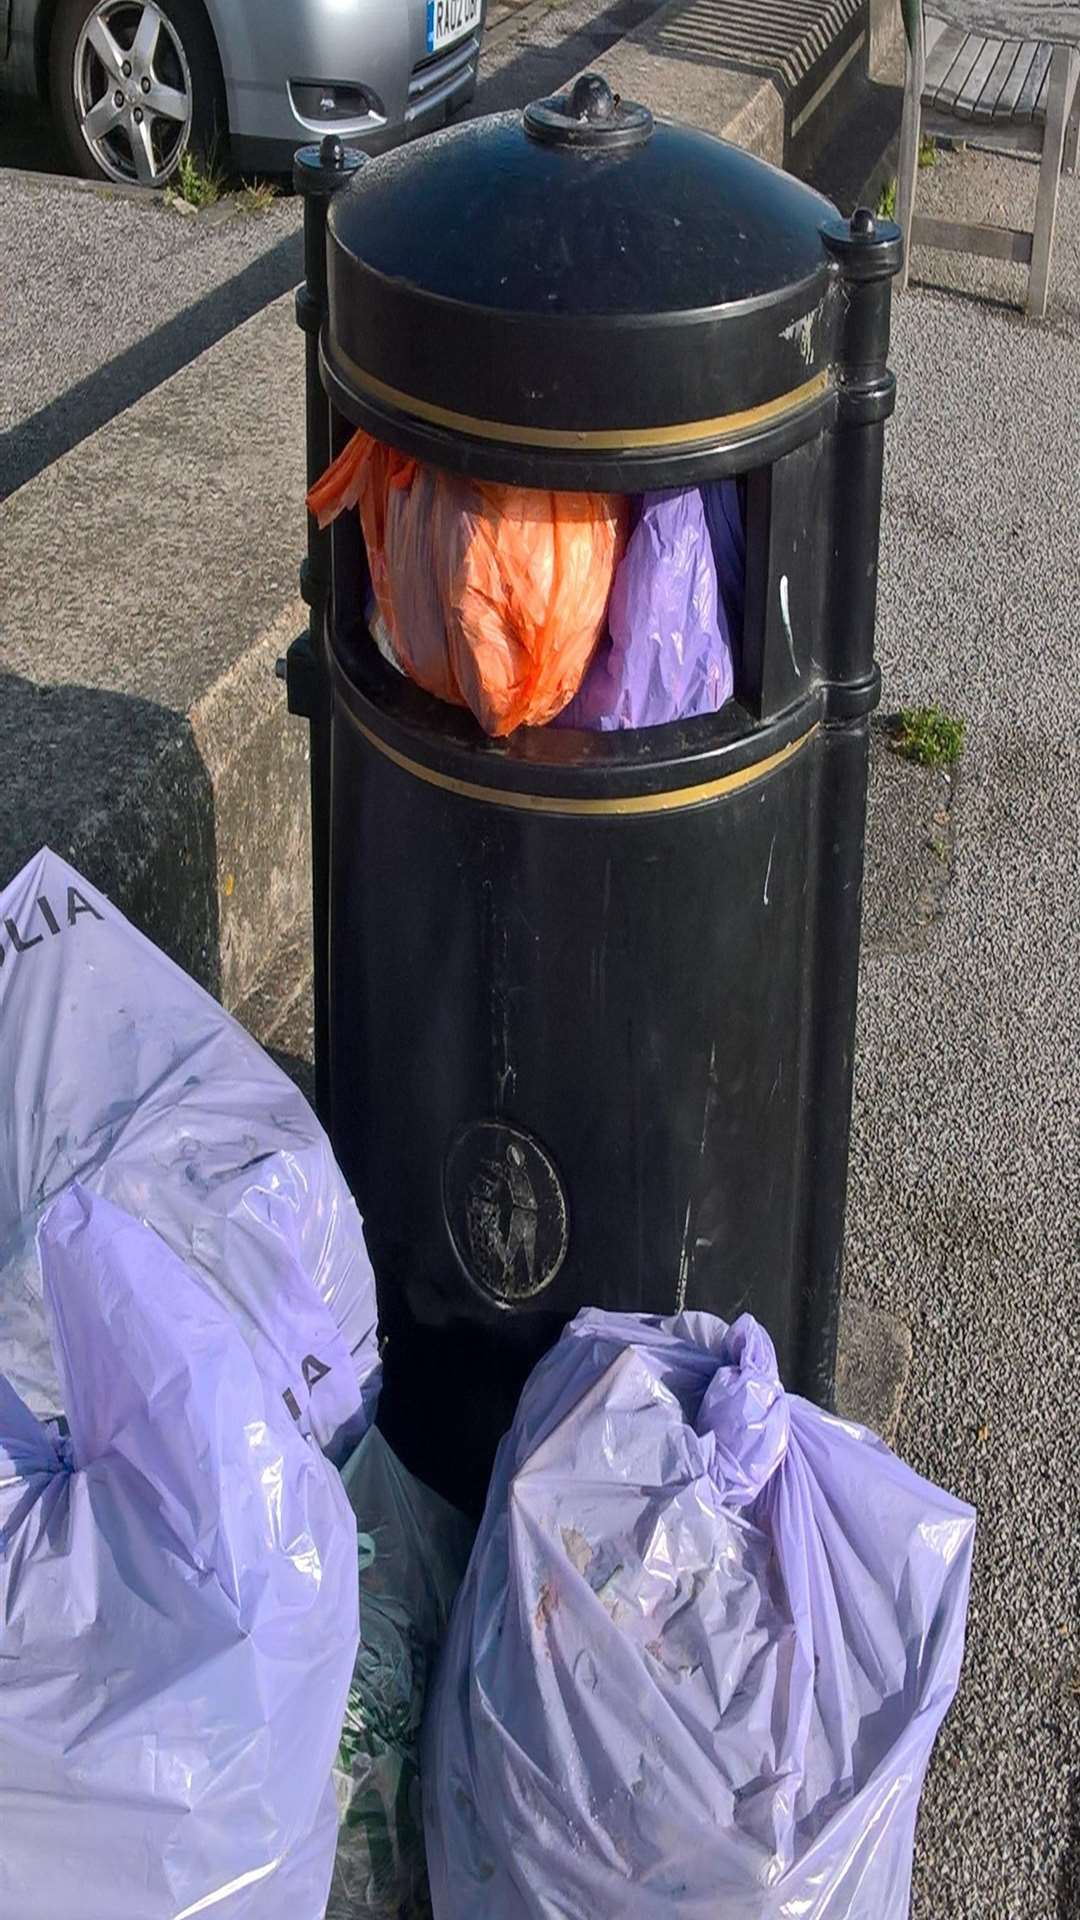 The bin cannot take the volume of rubbish